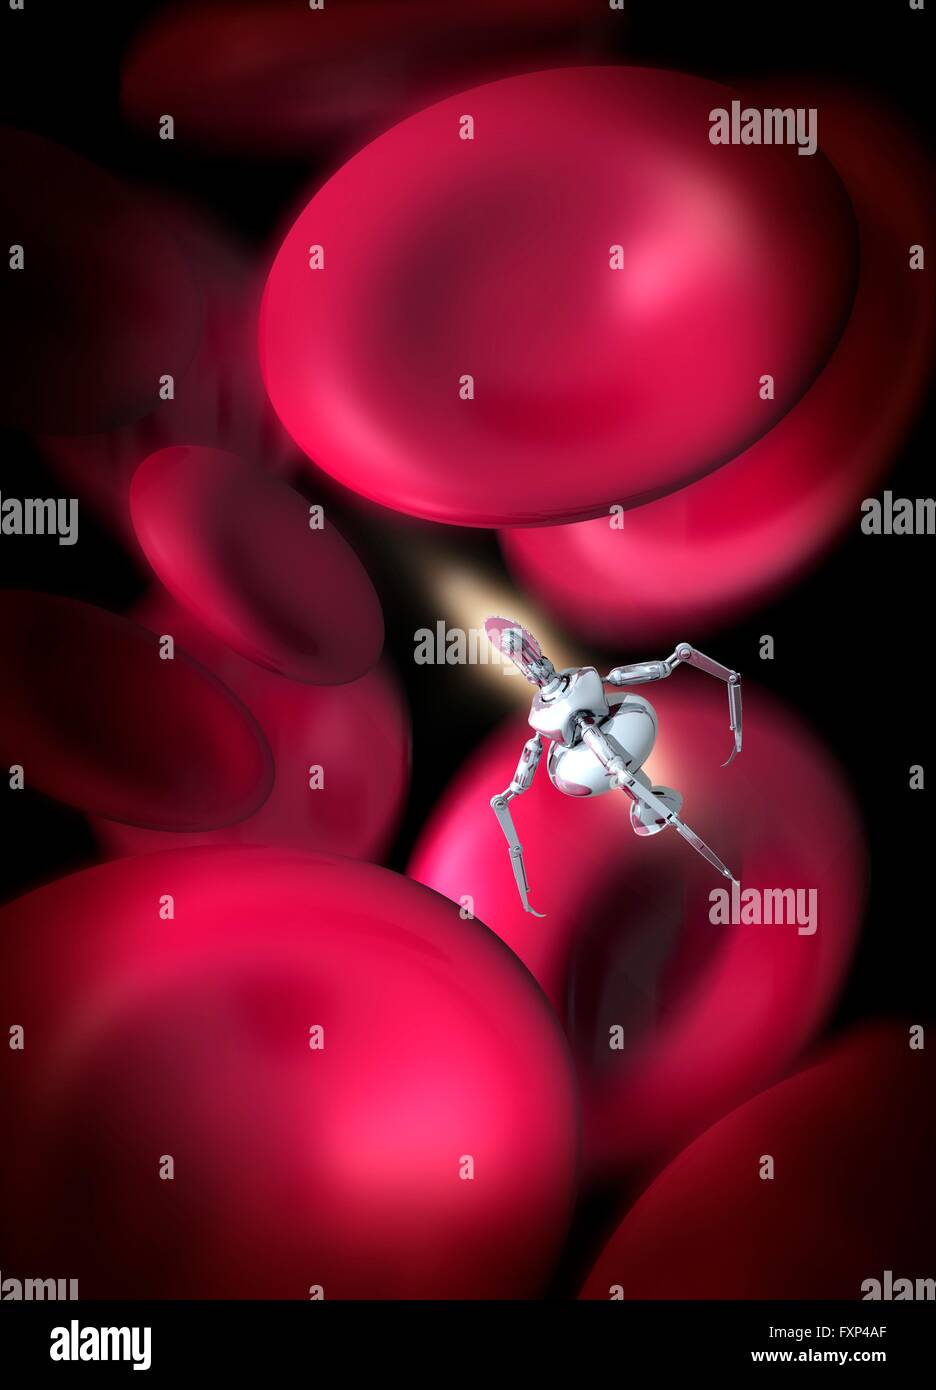 Nanobot in the human bloodstream, computer illustration. Stock Photo